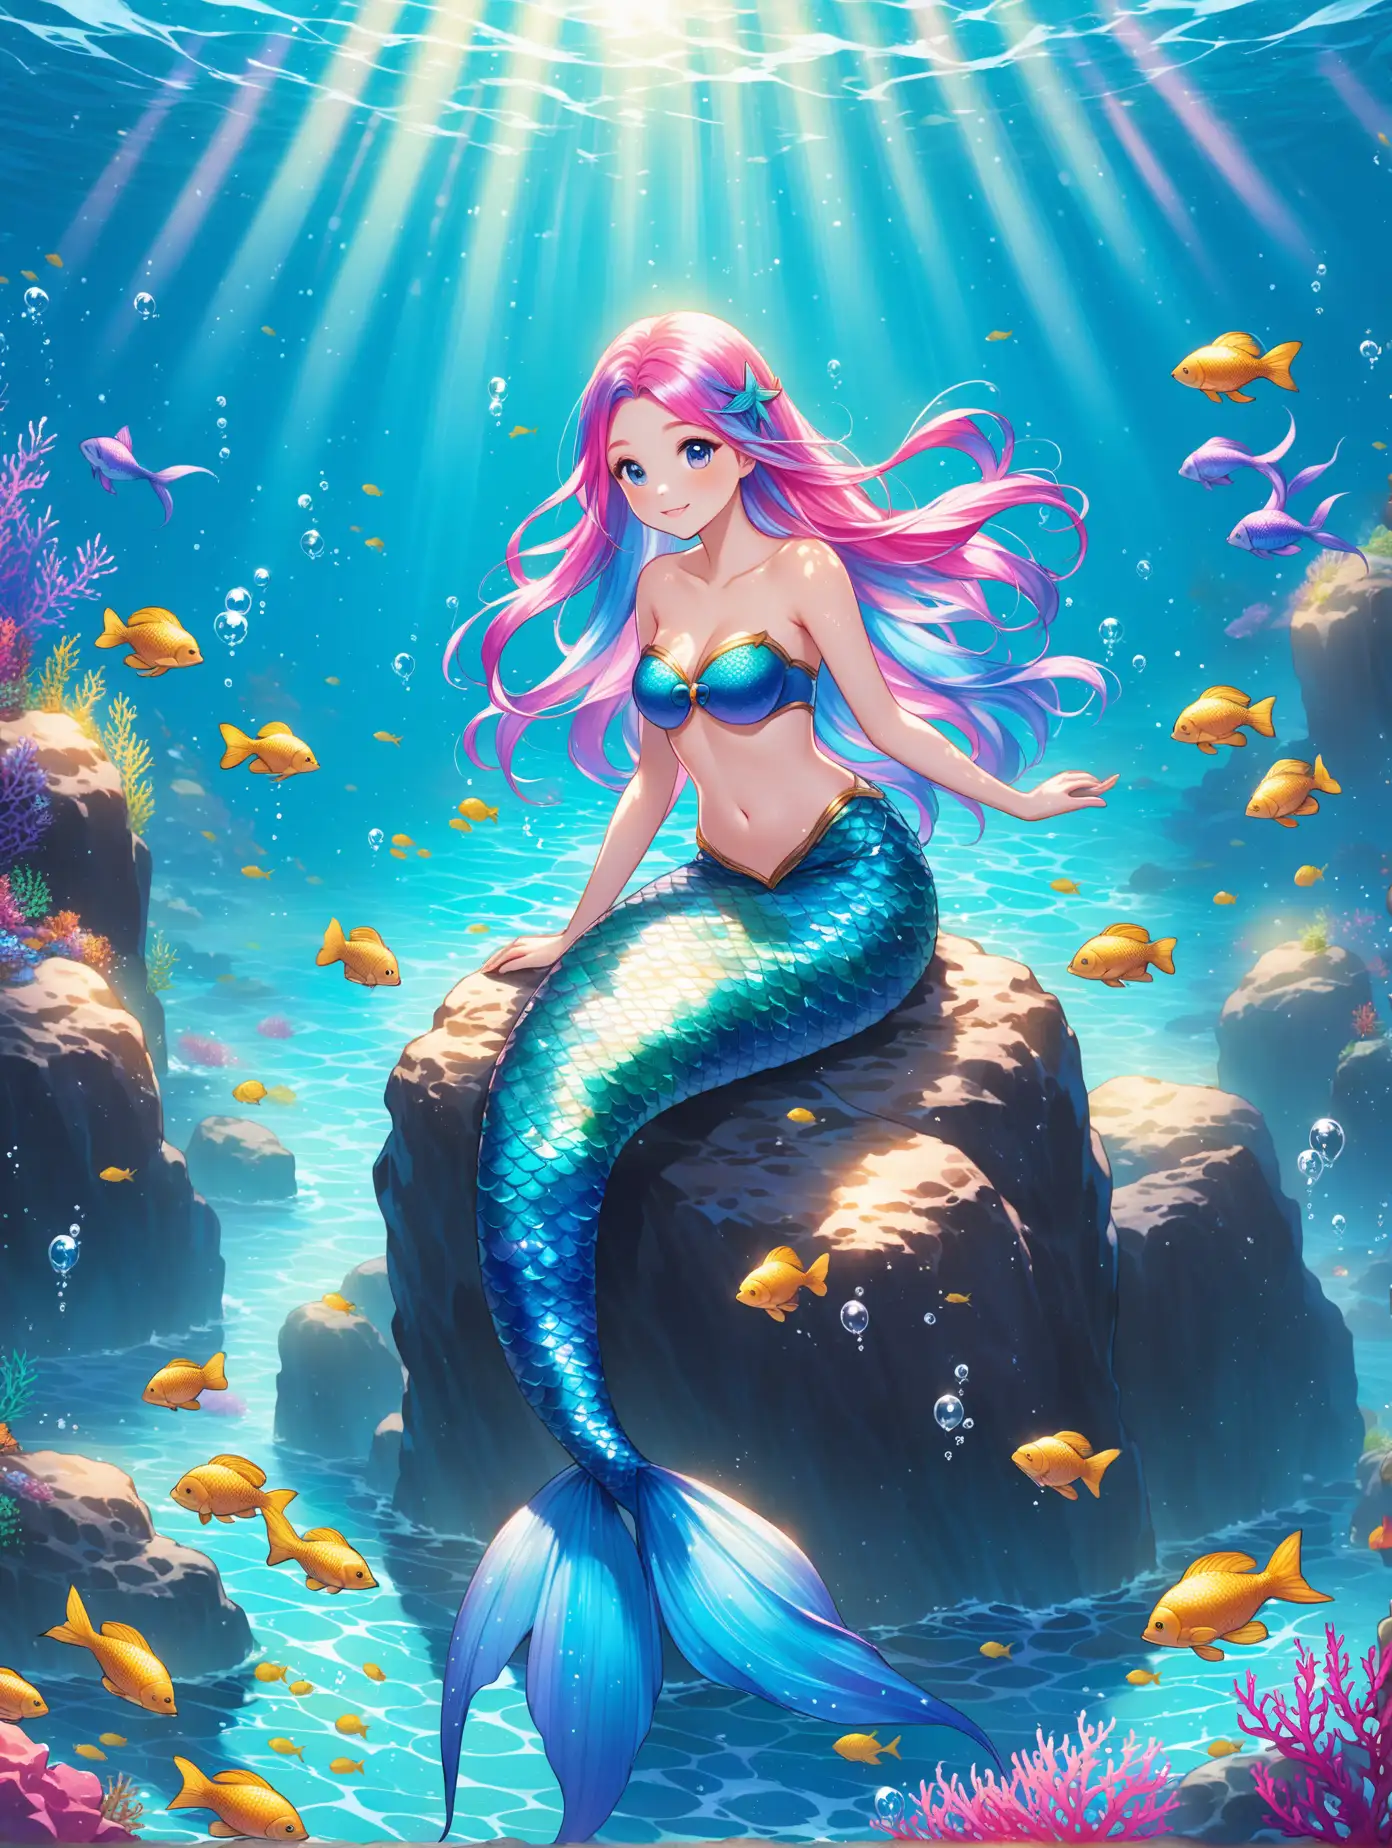 mermaid sitting on rocks, shimmering single blue tail splashing in the sea amongst fish, blue pink multi-coloured hair, 